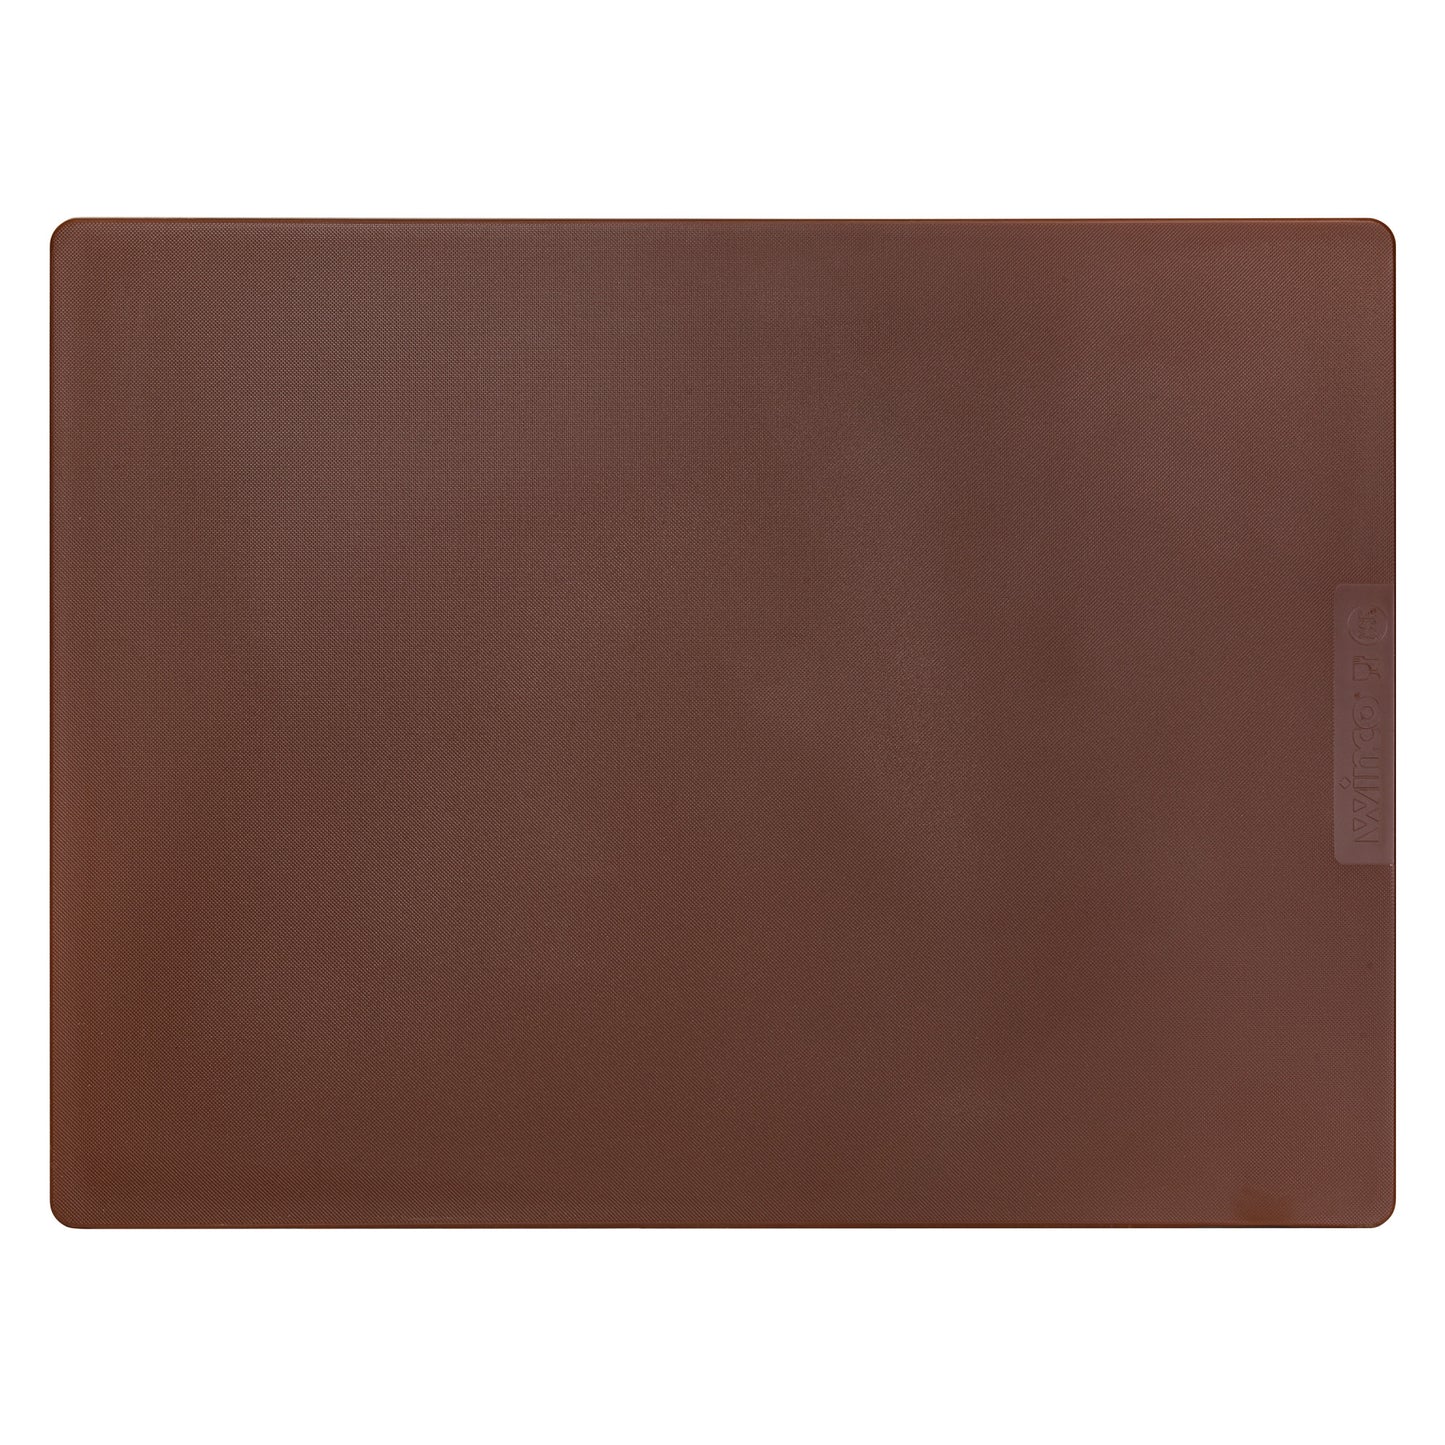 CBBN-1520 - HACCP Color-Coded Cutting Board - 15 x 20, Brown